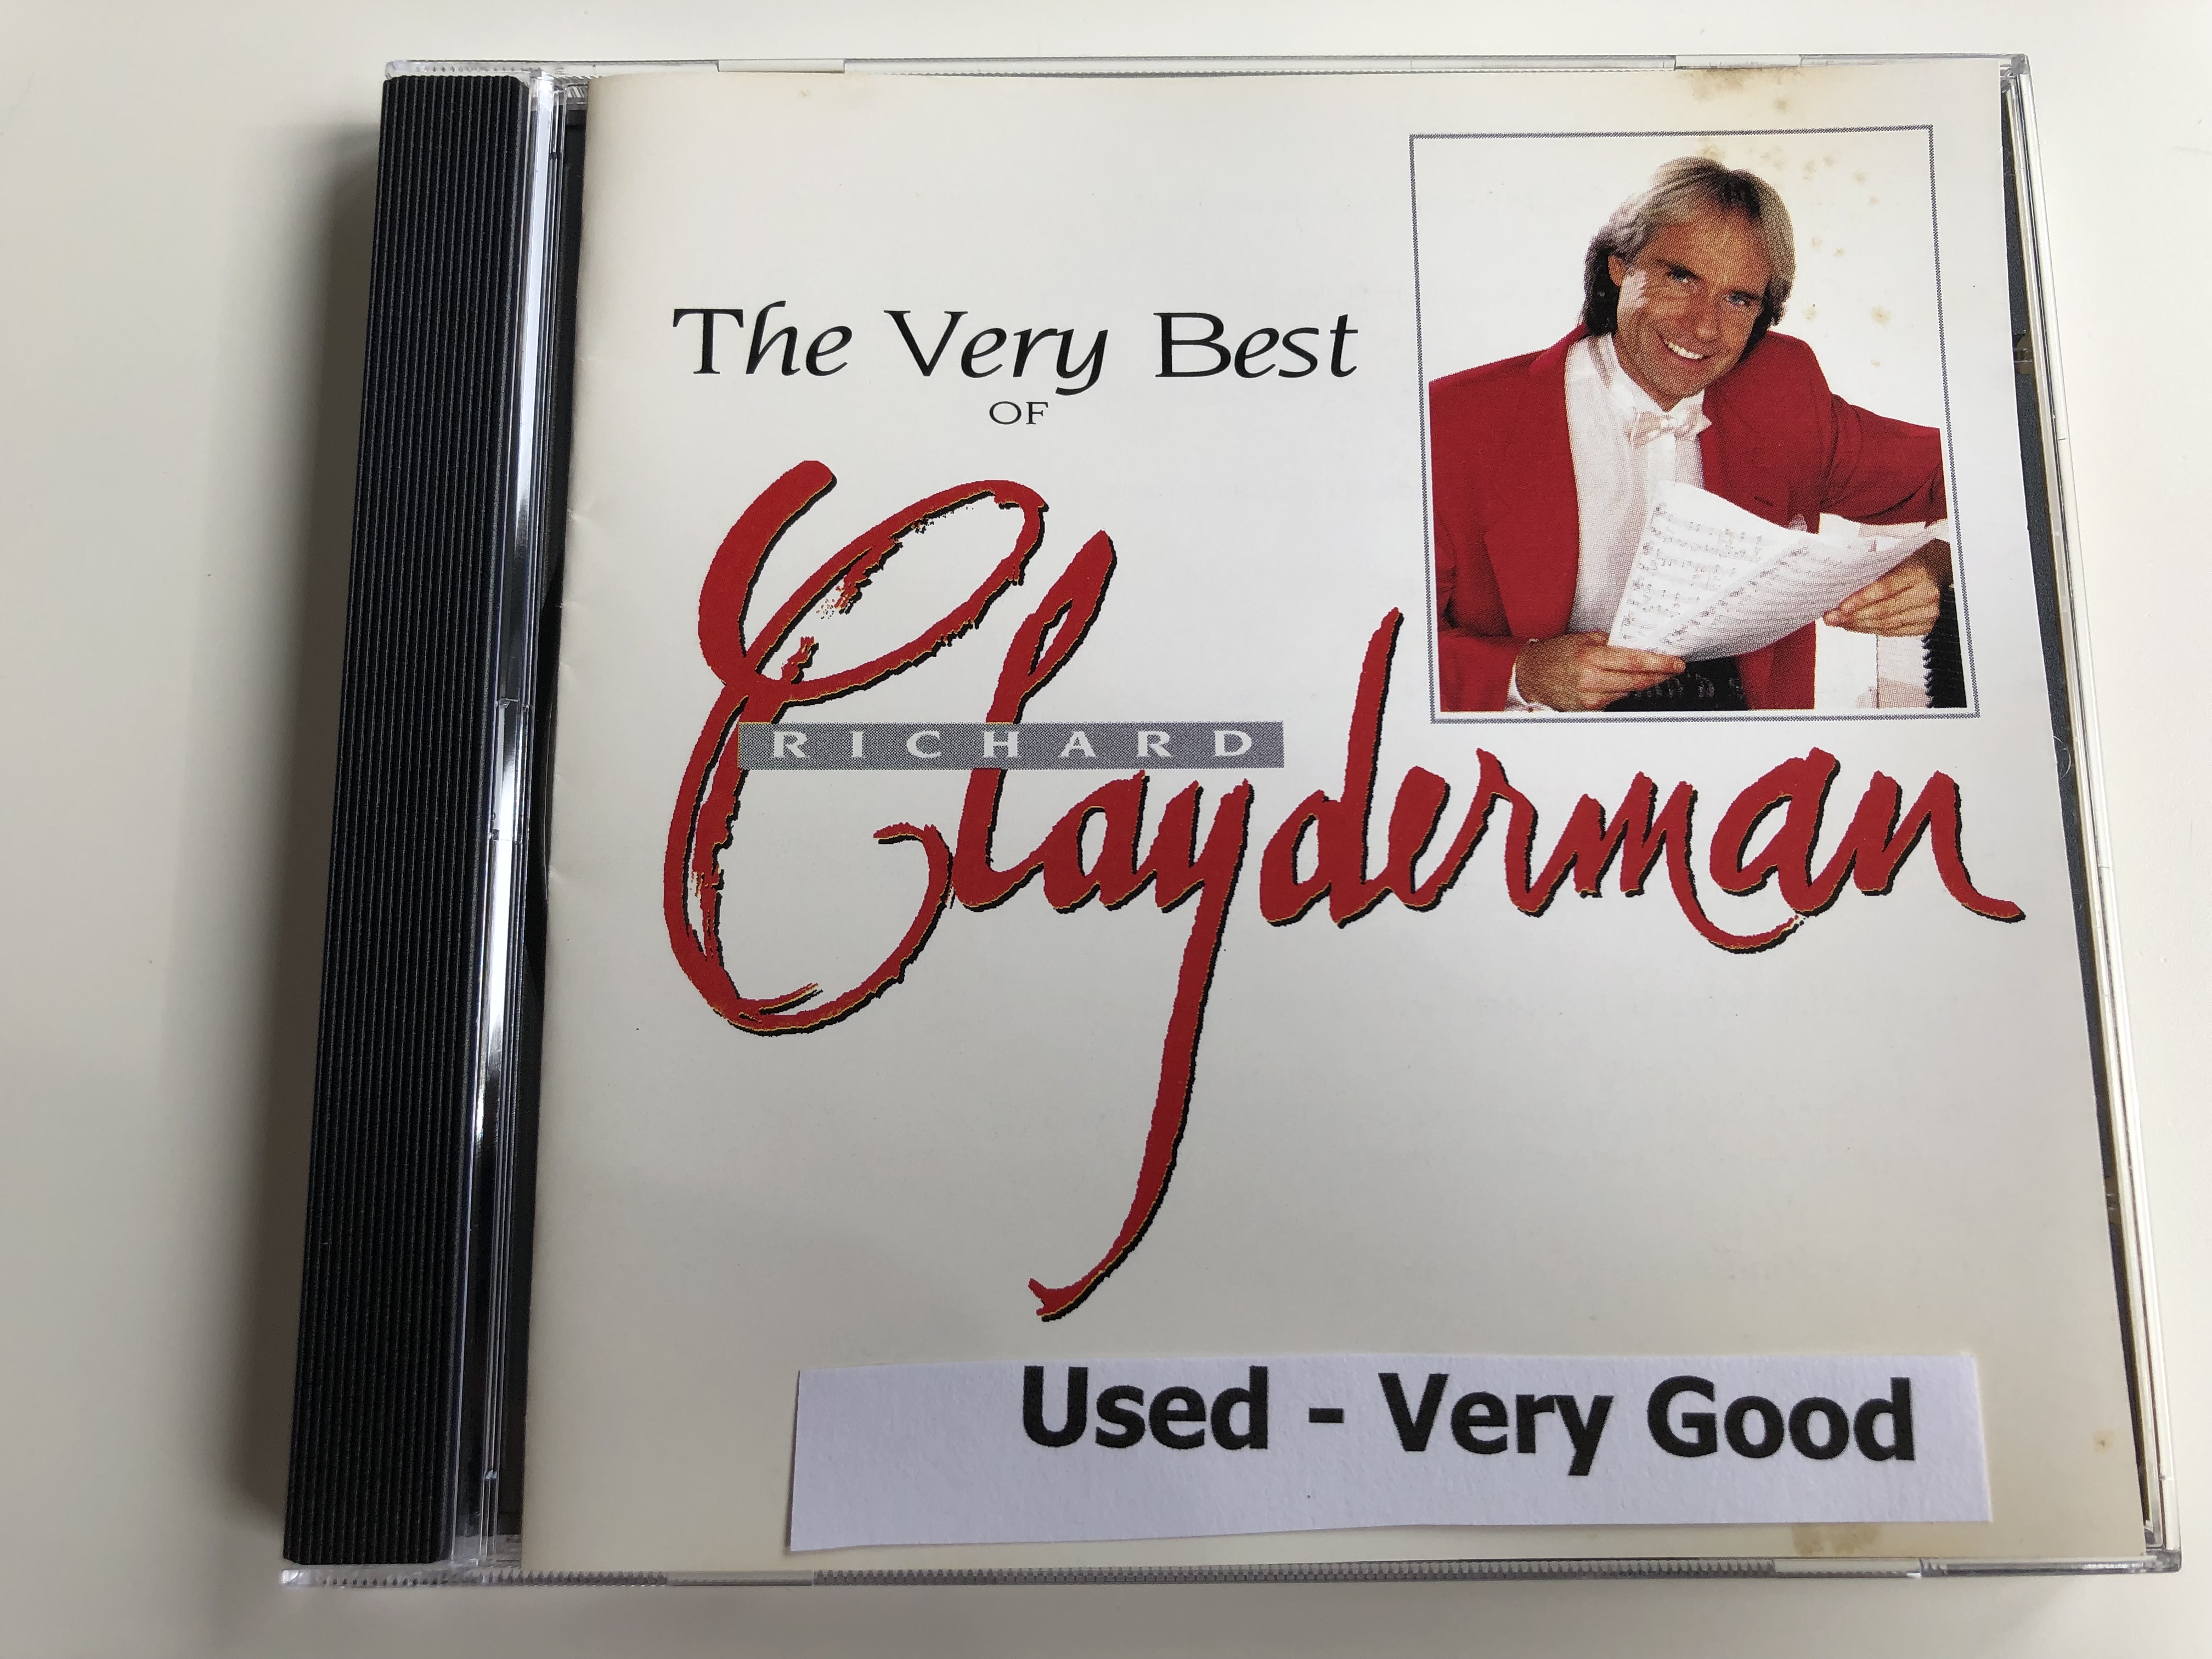 the-very-best-of-richard-clayderman-delphine-audio-cd-1995-068-099-2-1-.jpg